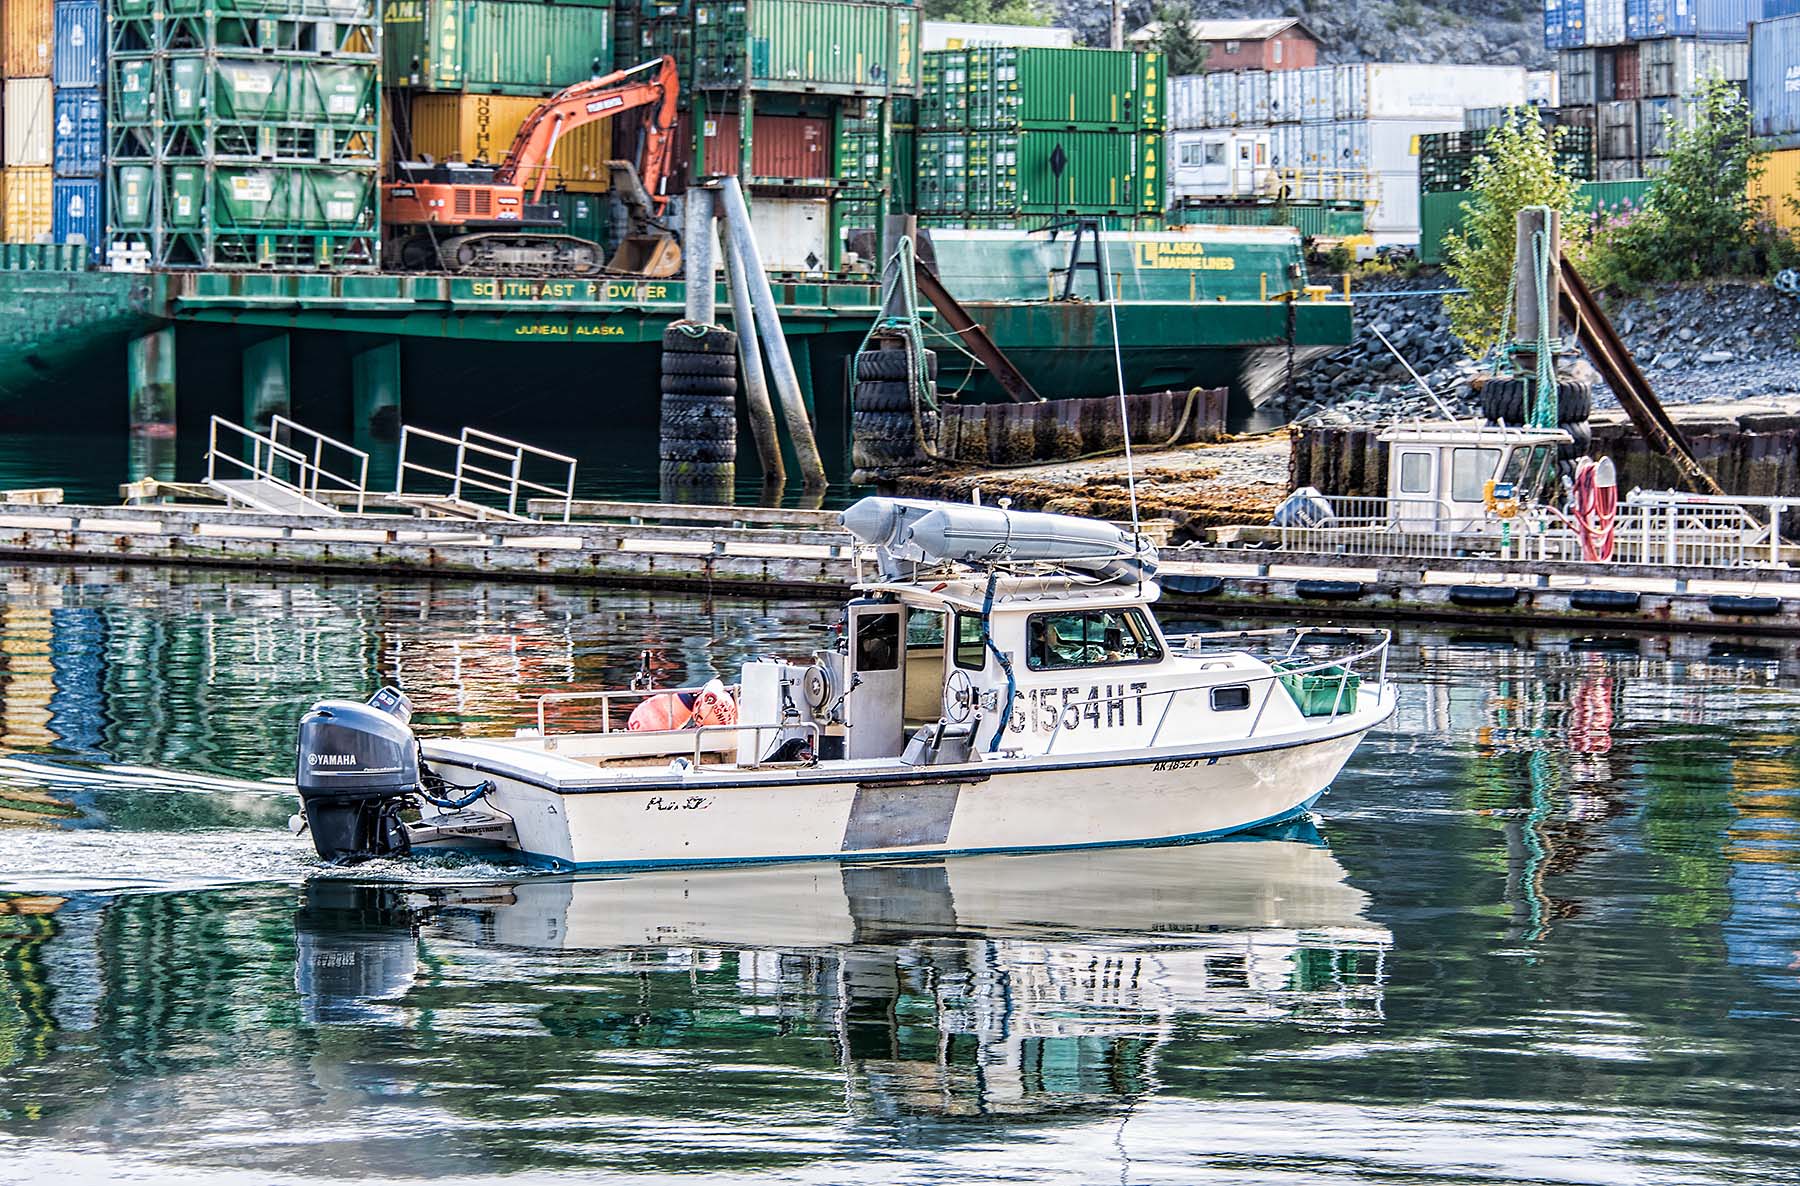 Harbor, copyright © Tom Beach